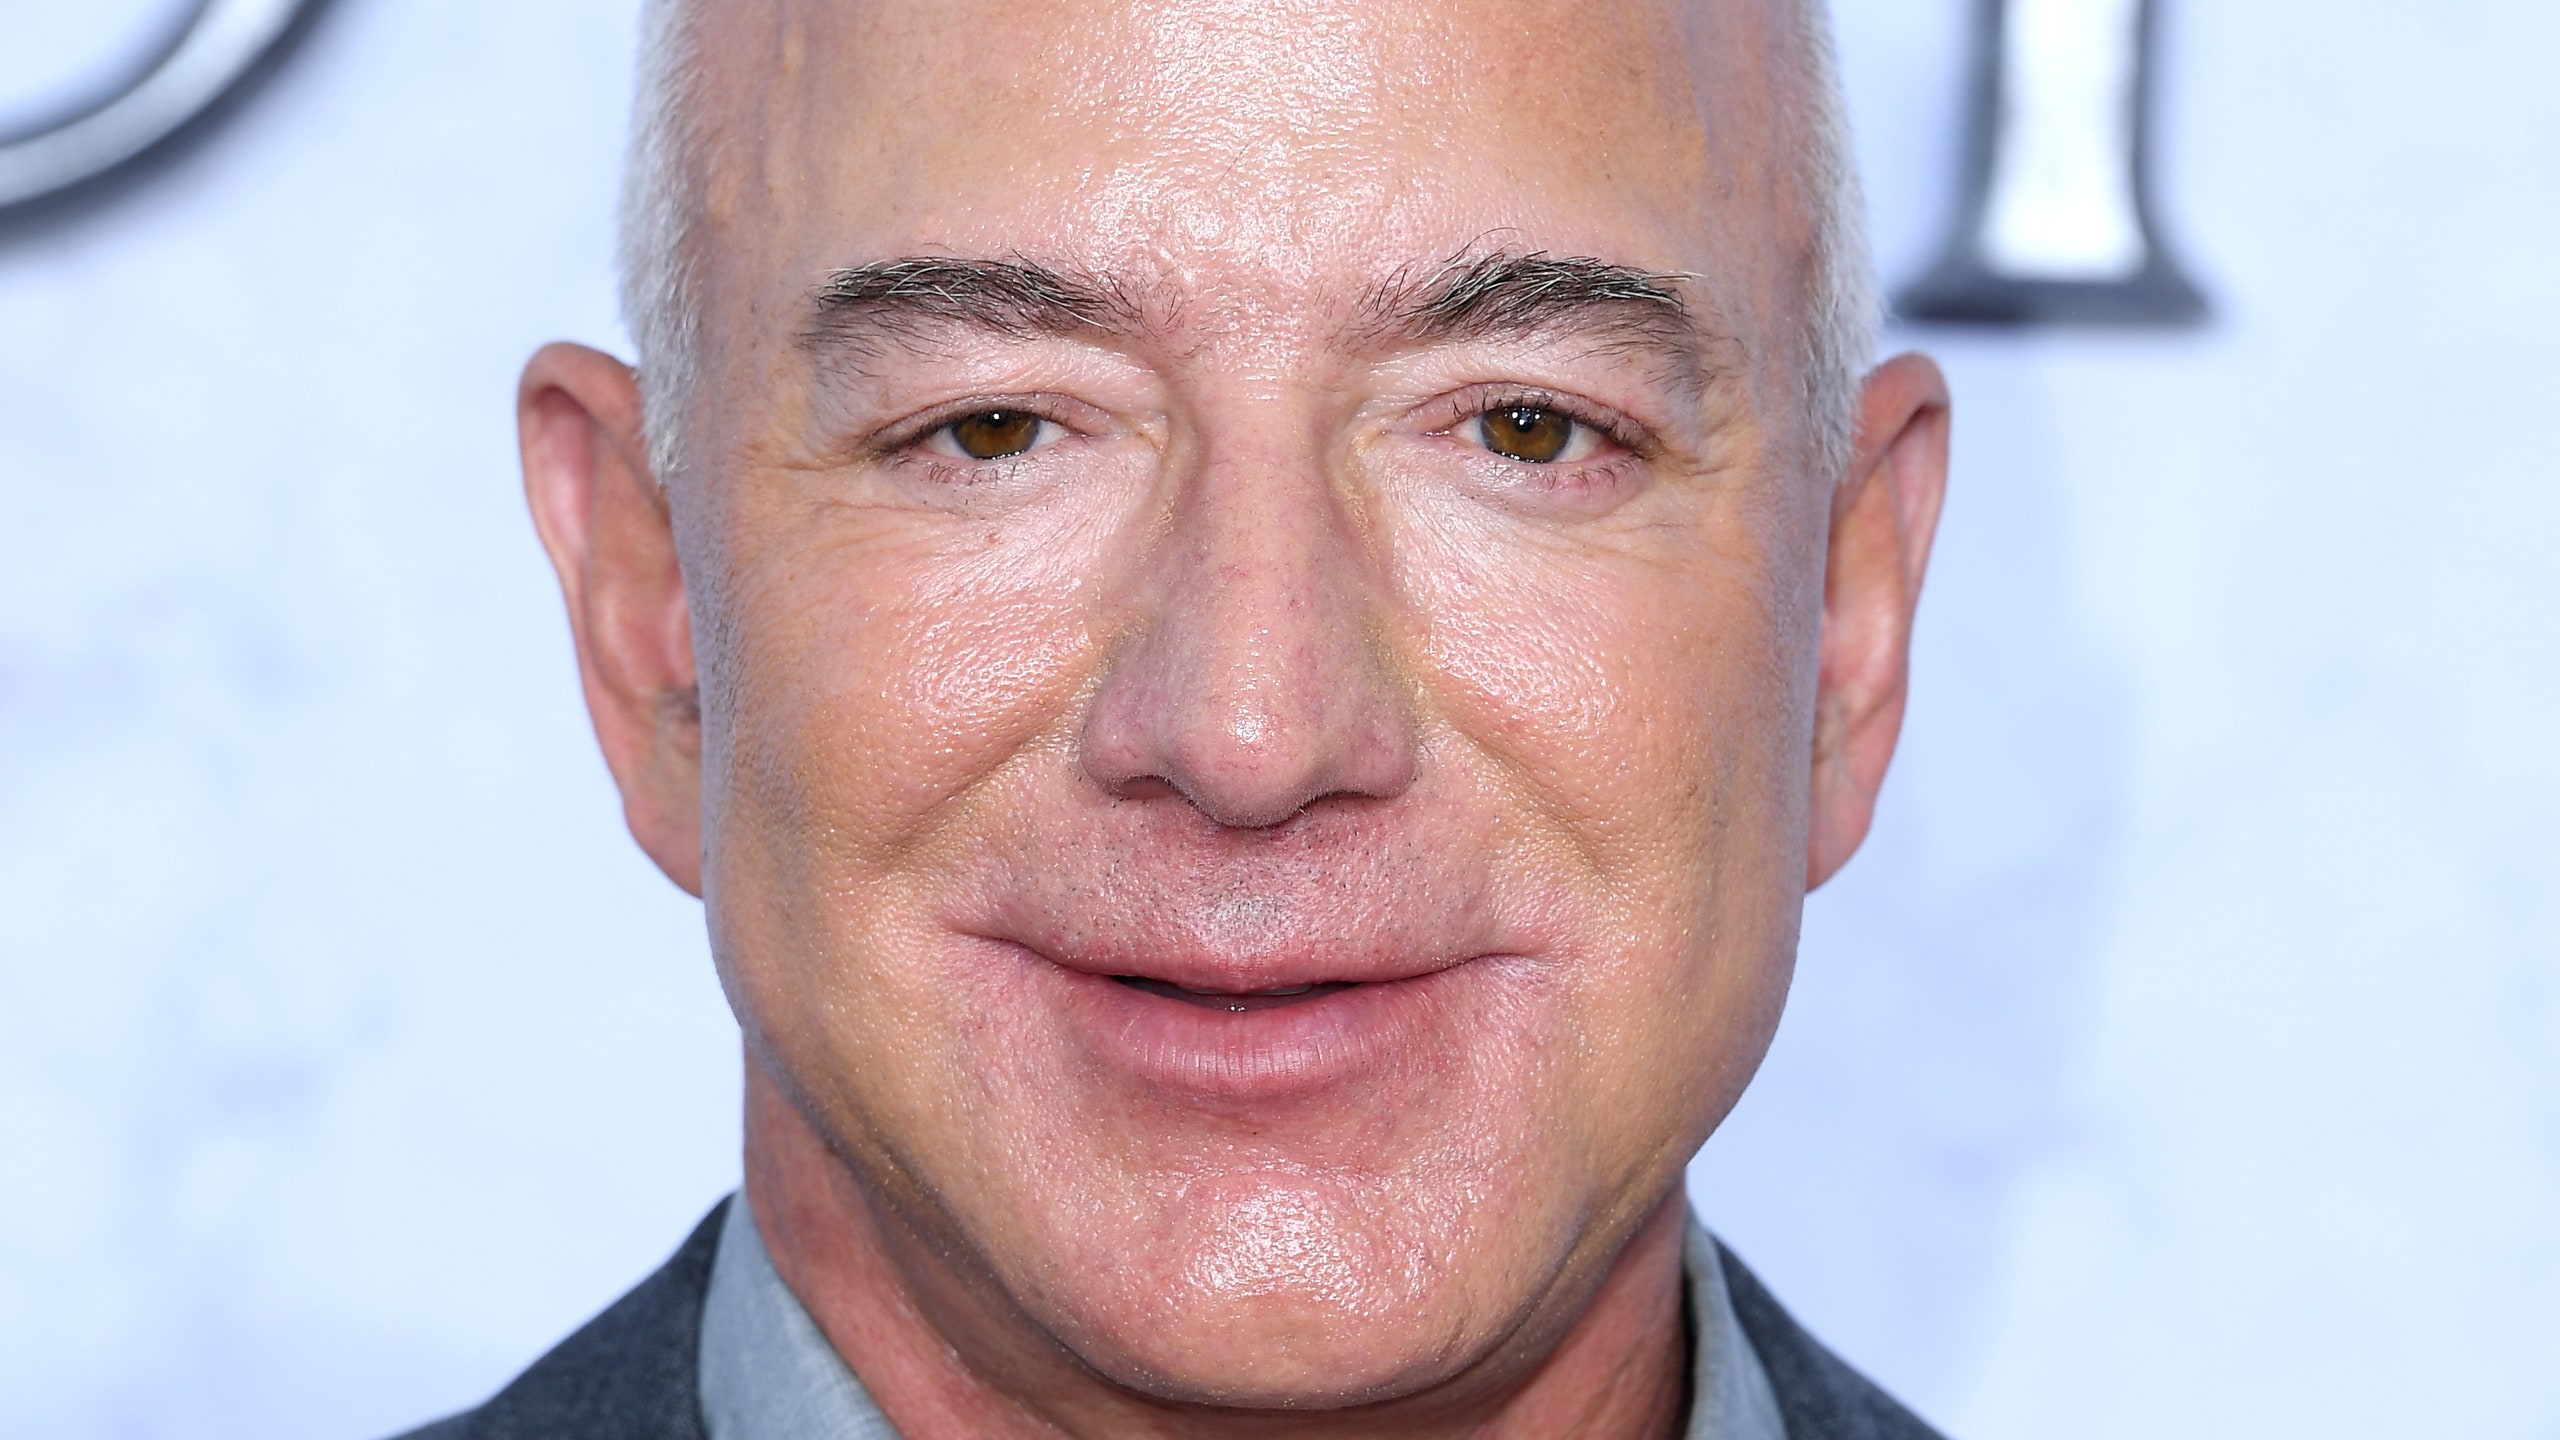 Jeff Bezos in gray suit smiling